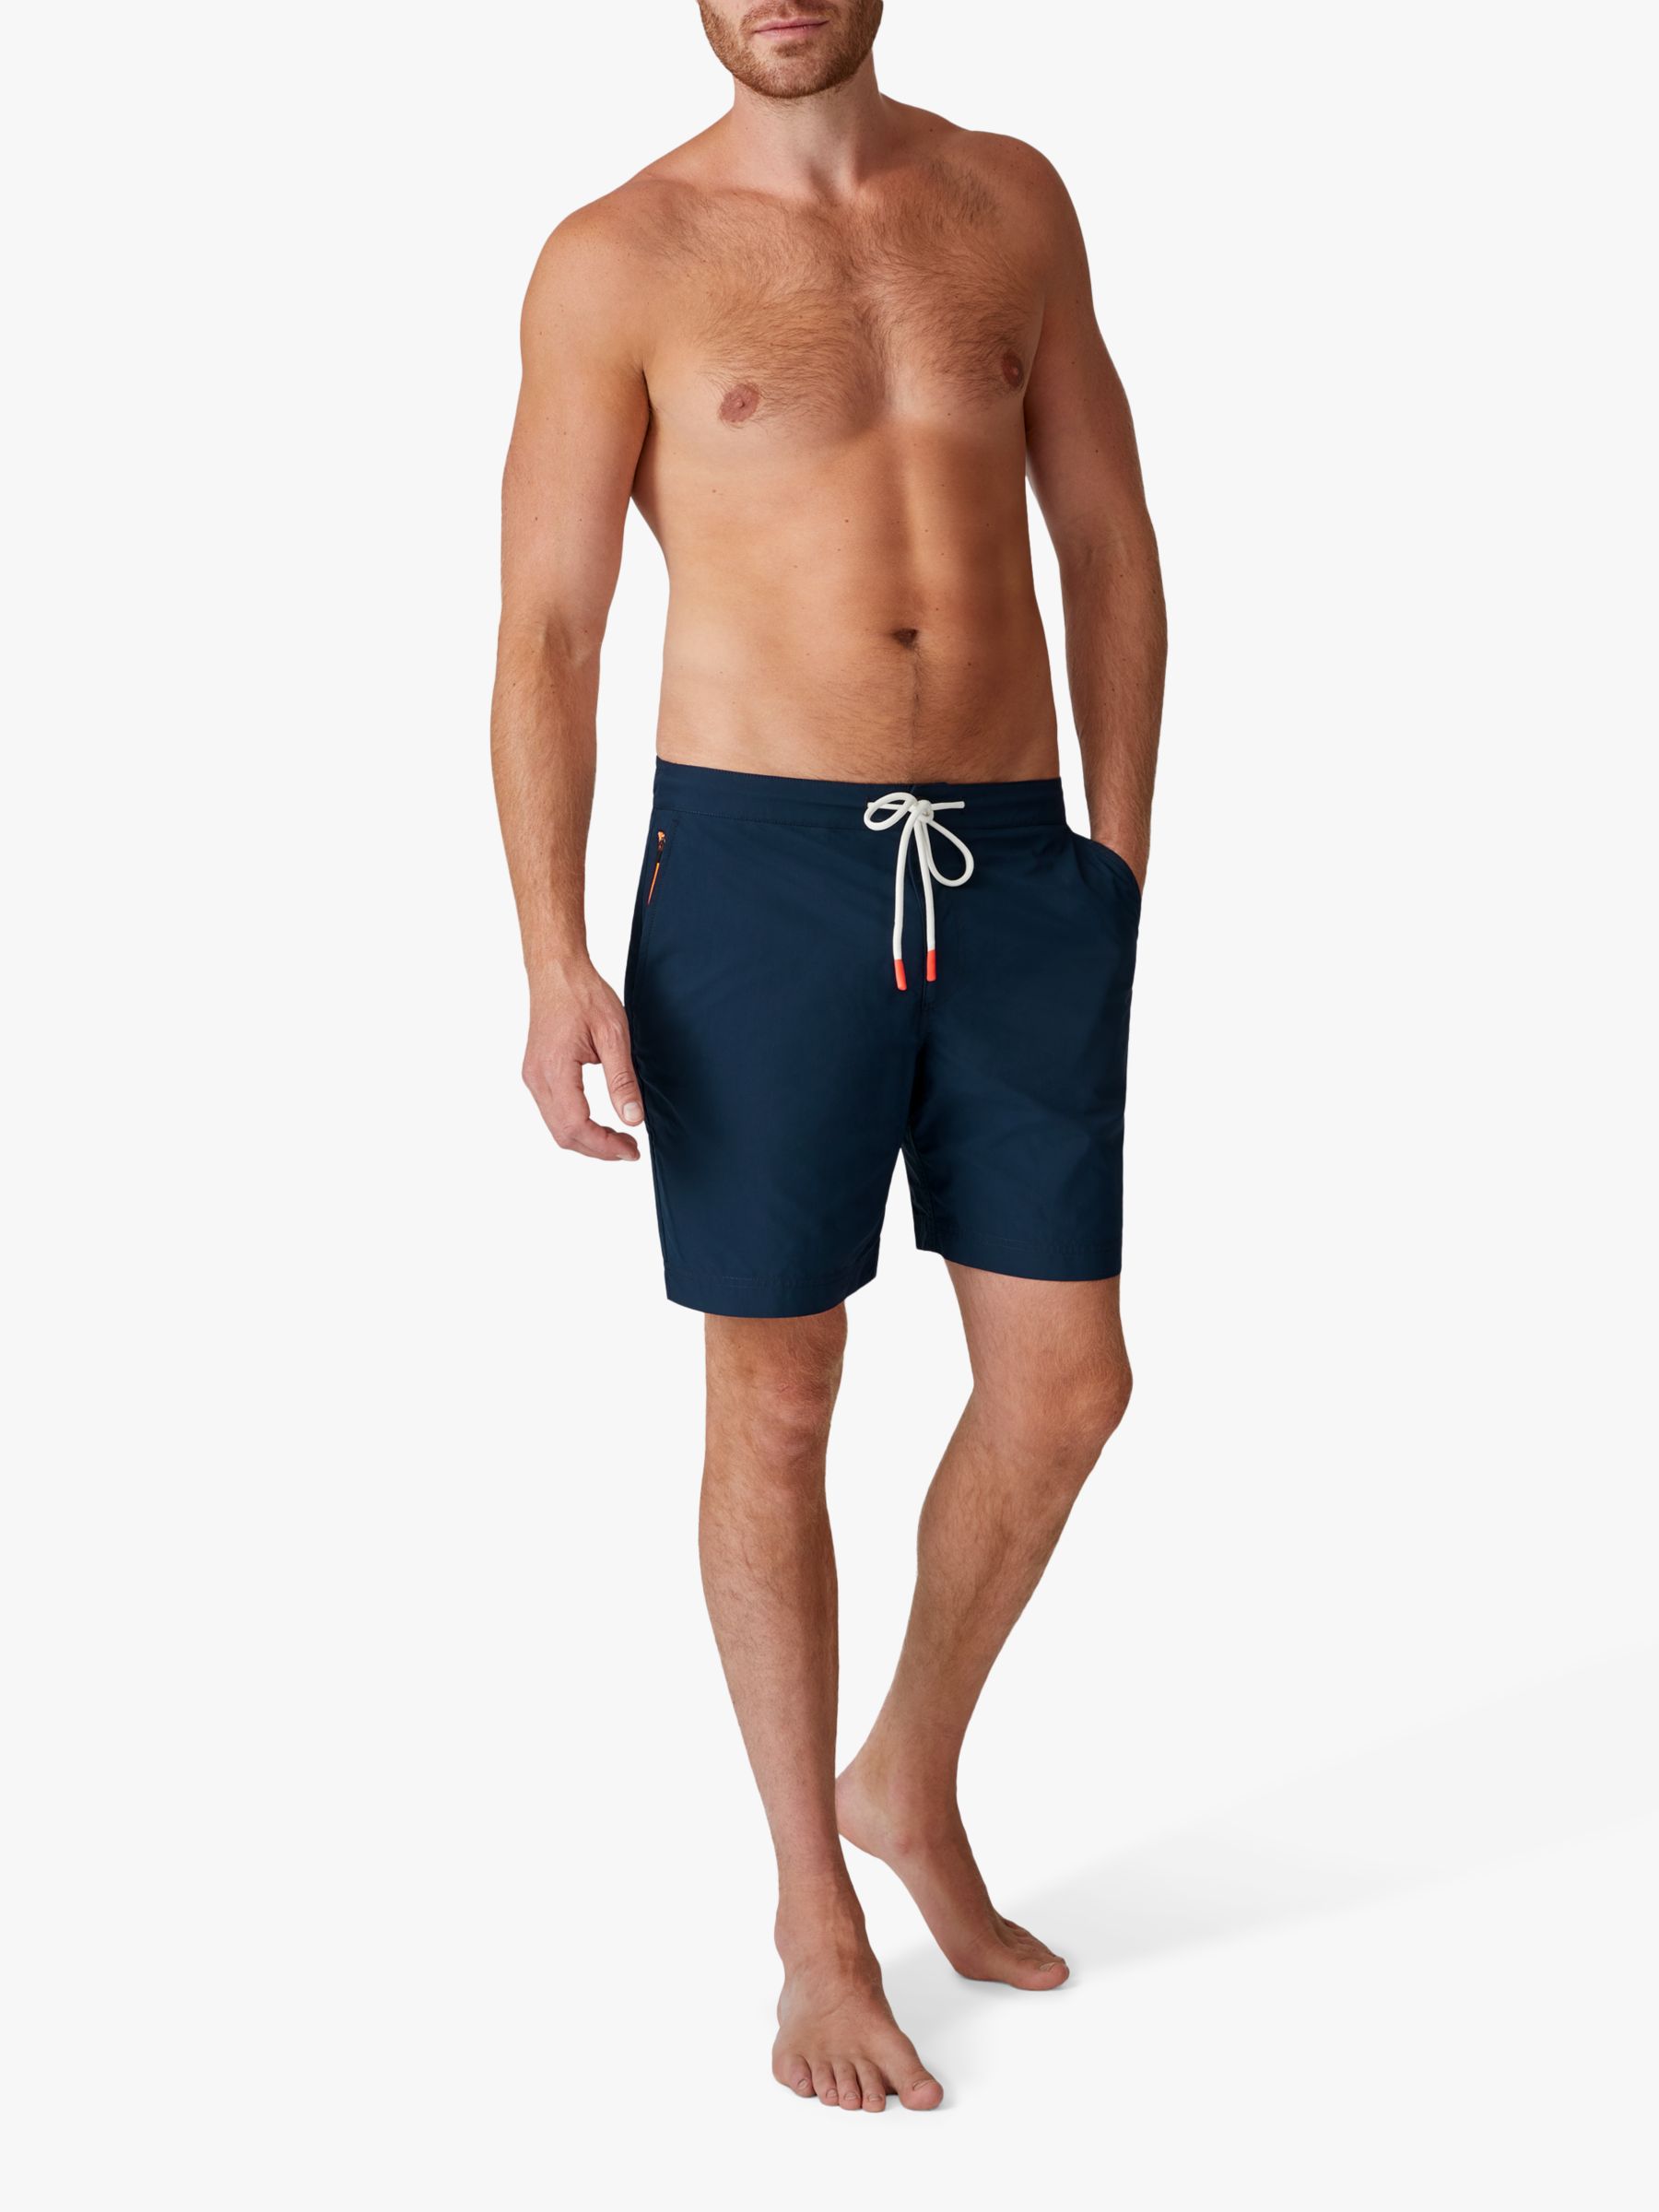 SPOKE Swims Broad Thigh Swim Shorts, Navy, 37R